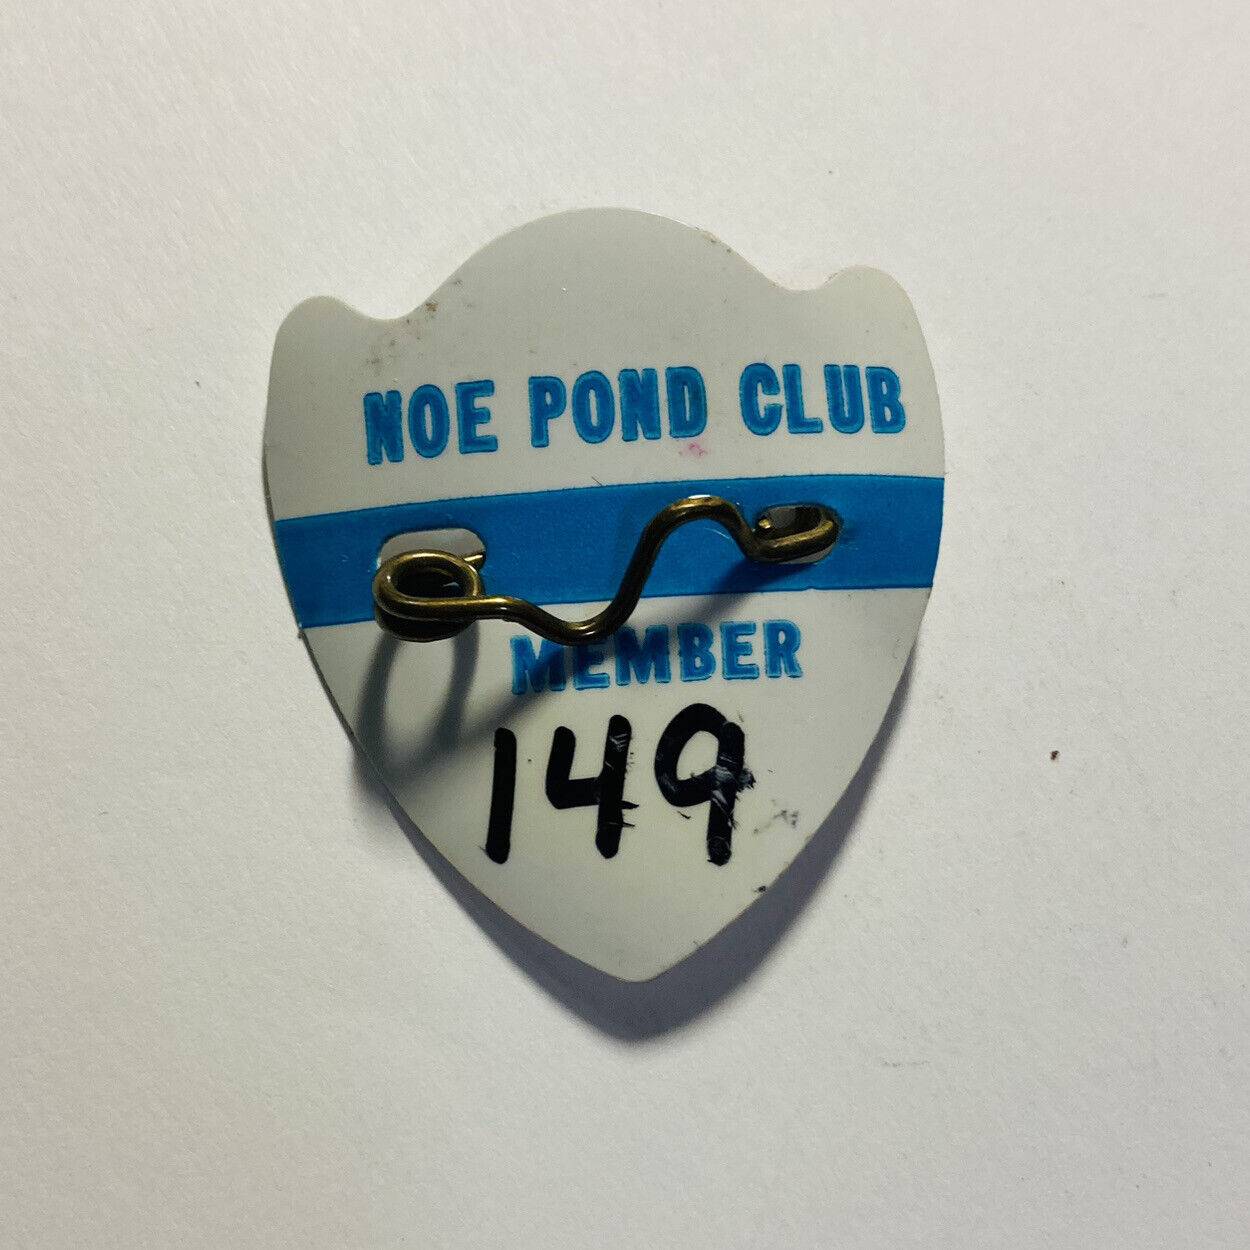 Vintage Noe Pond Club Member 149 Badge Lapel Pin Art Decor 18